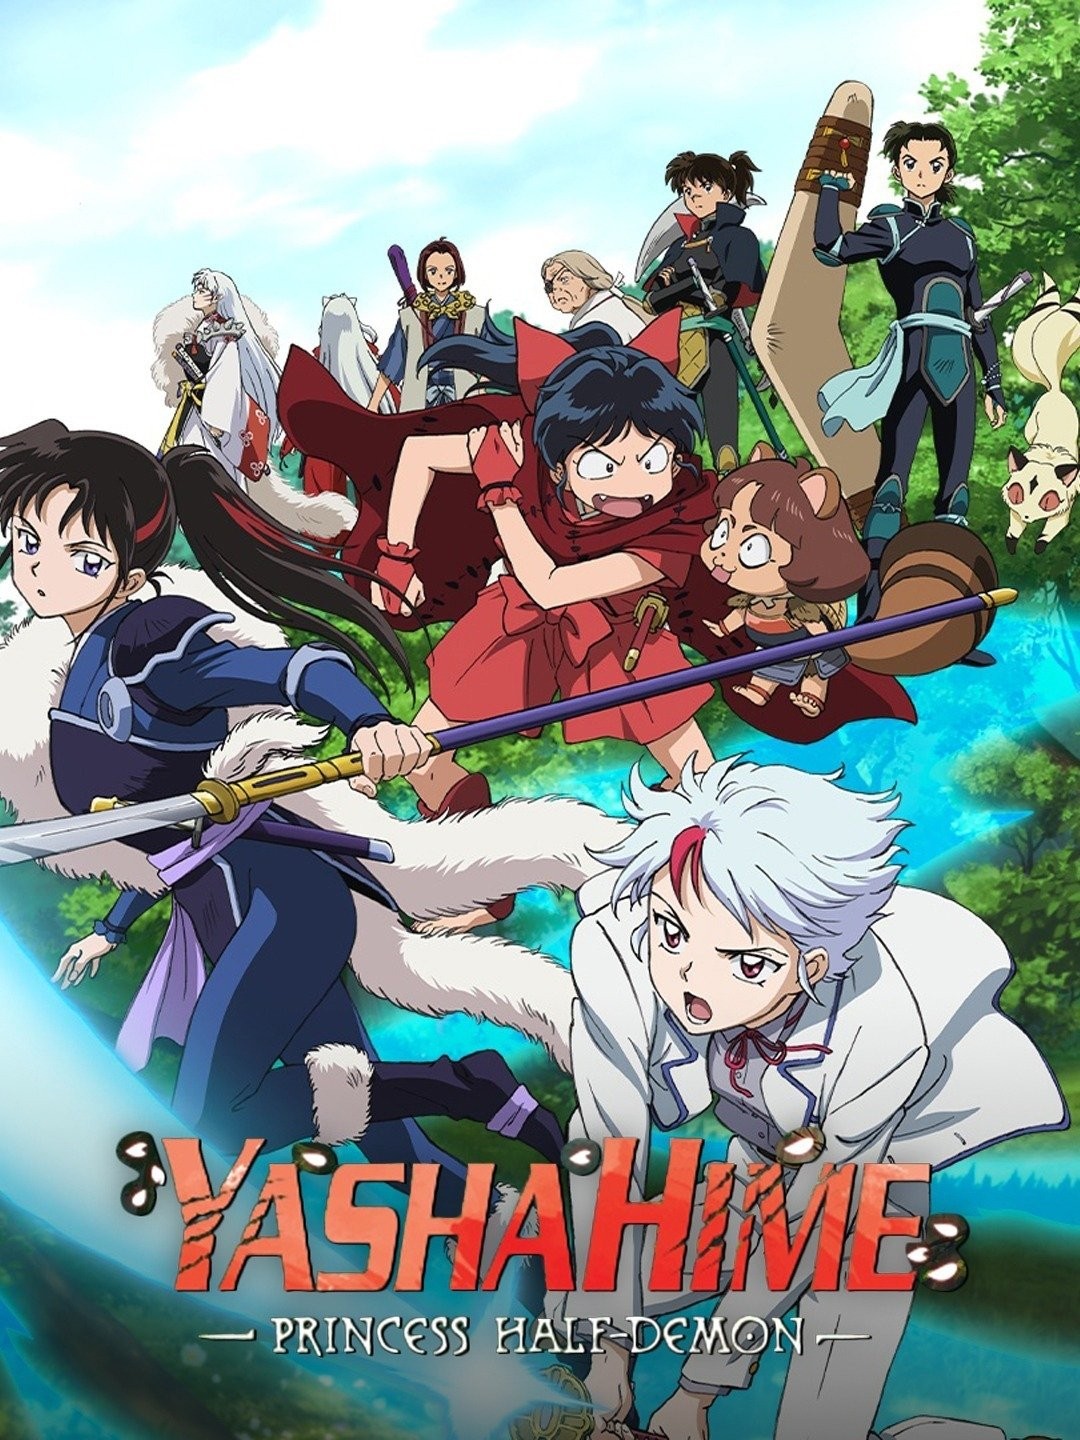 Yashahime: Princess Half-Demon (TV Series 2020– ) - Episode list - IMDb